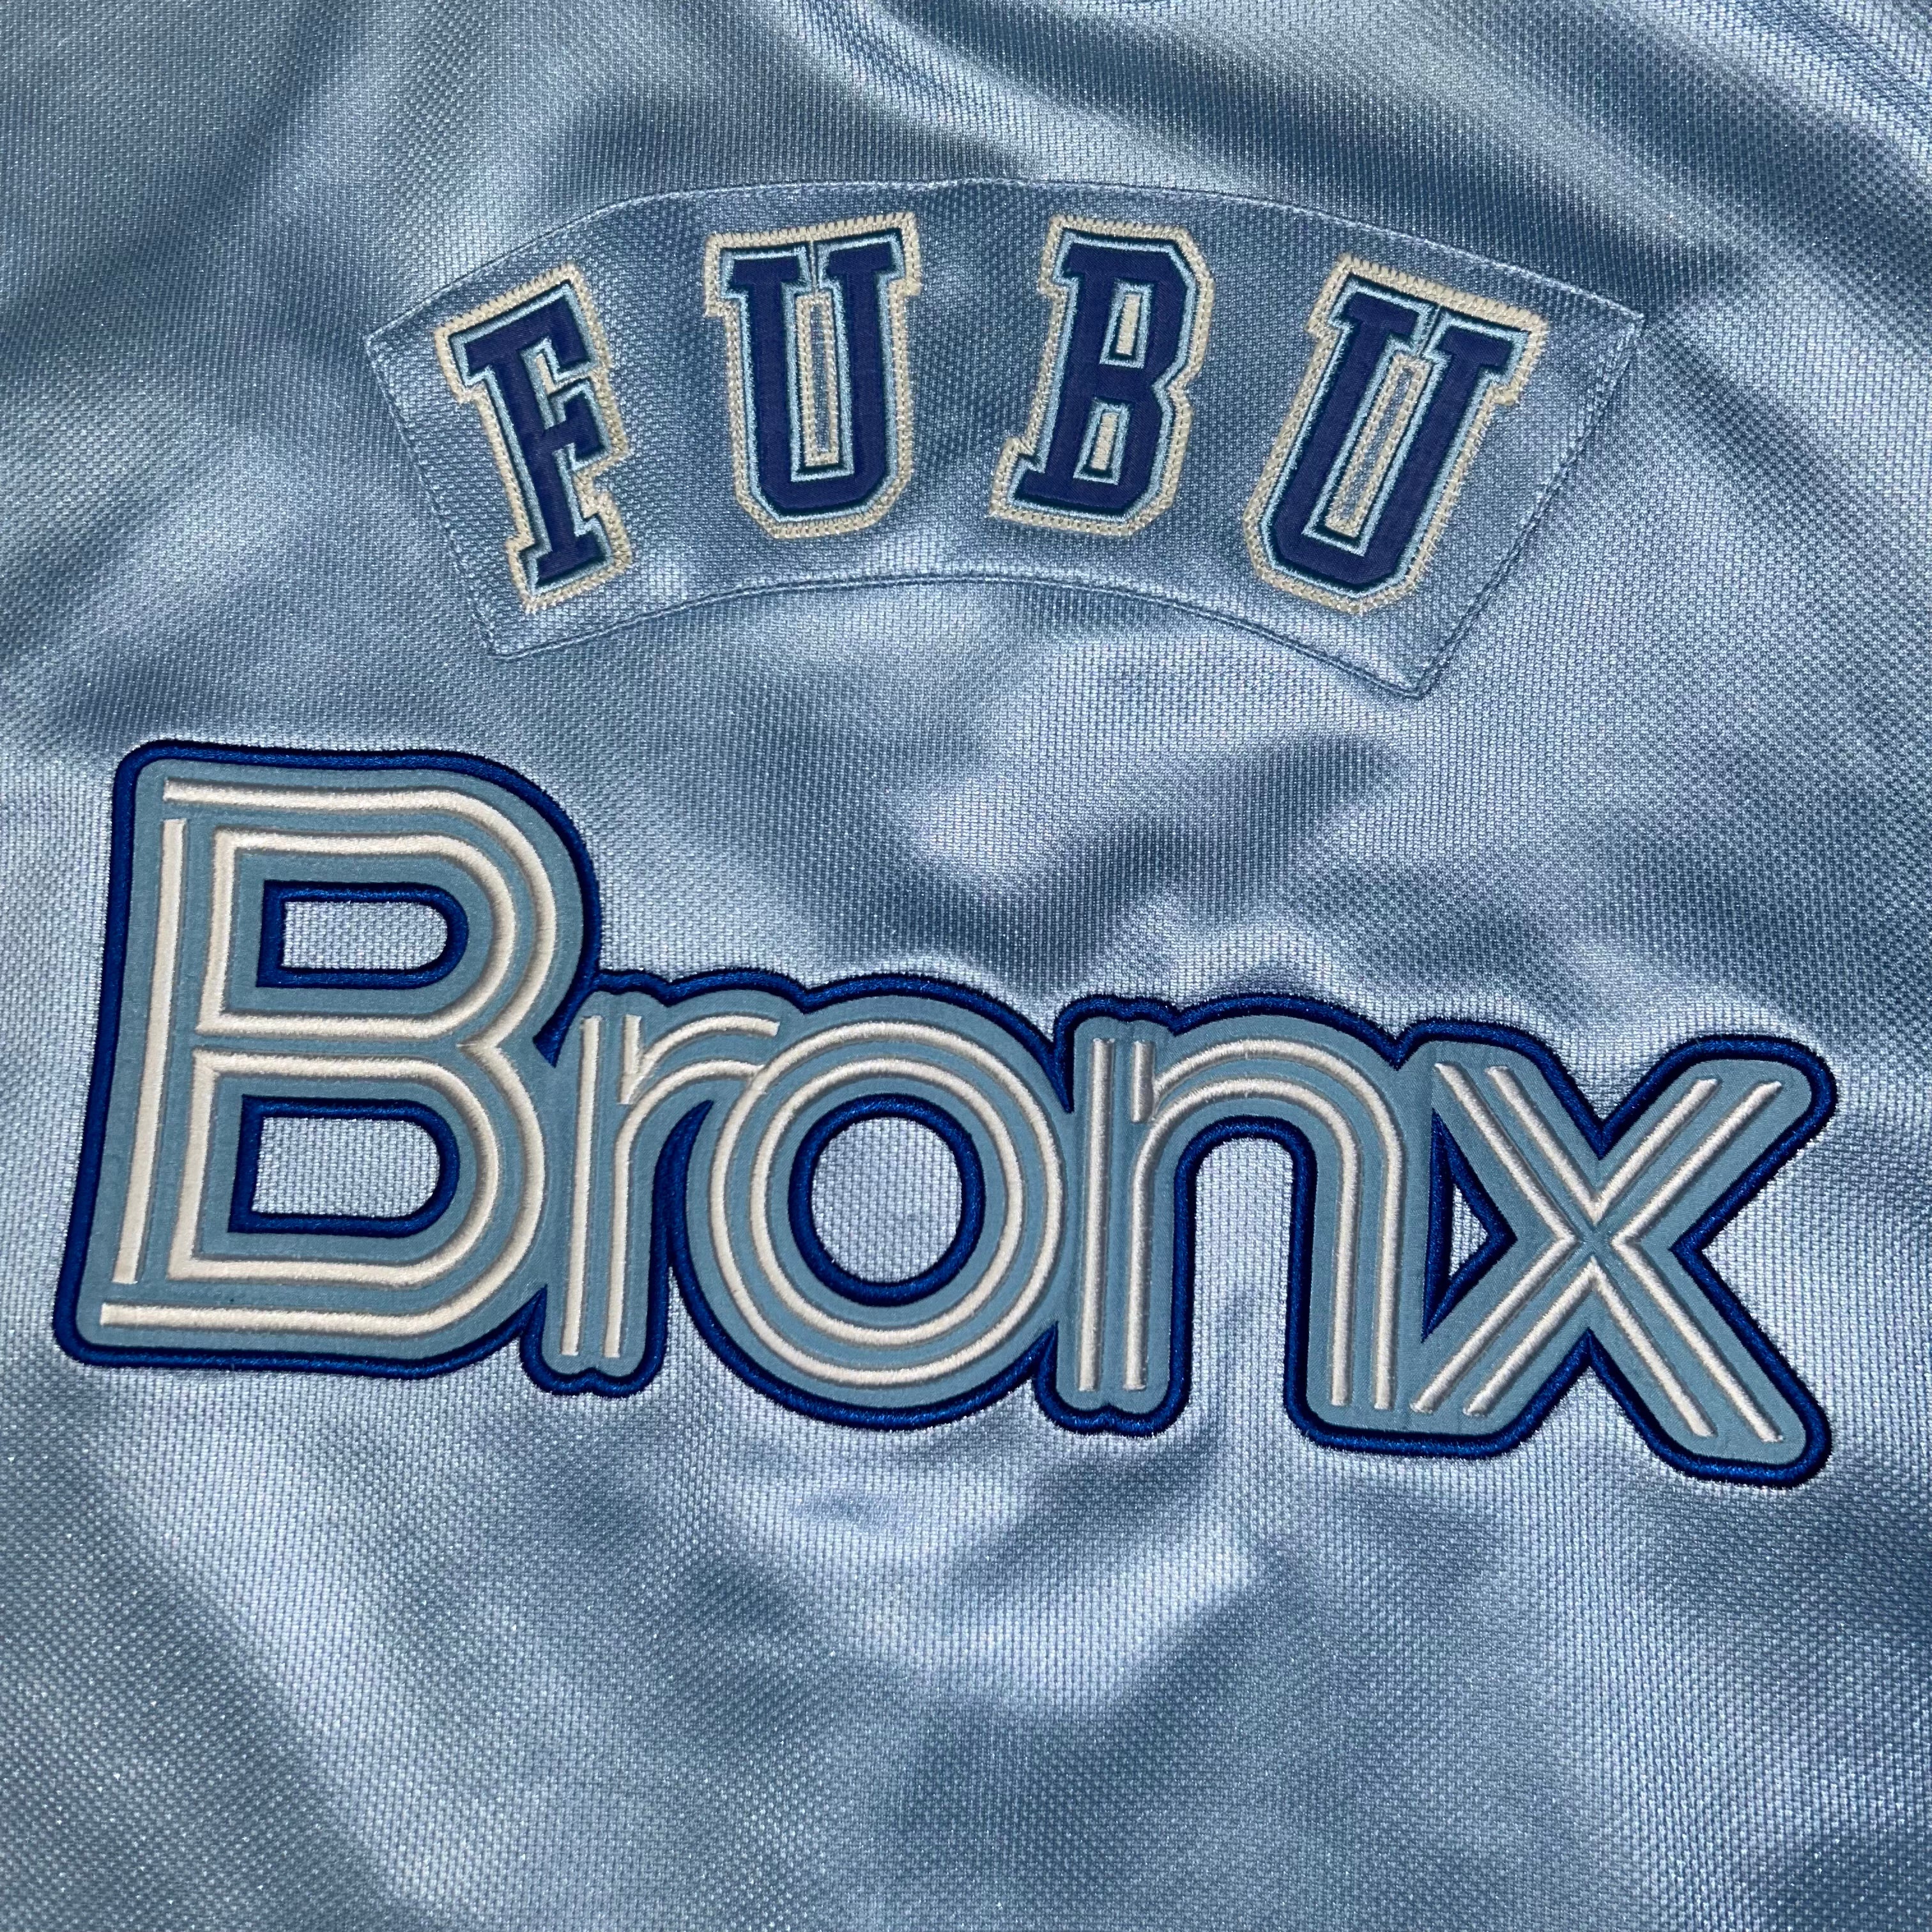 Jersey FUBU Bronx Cityseries Limited Edition  (XL)